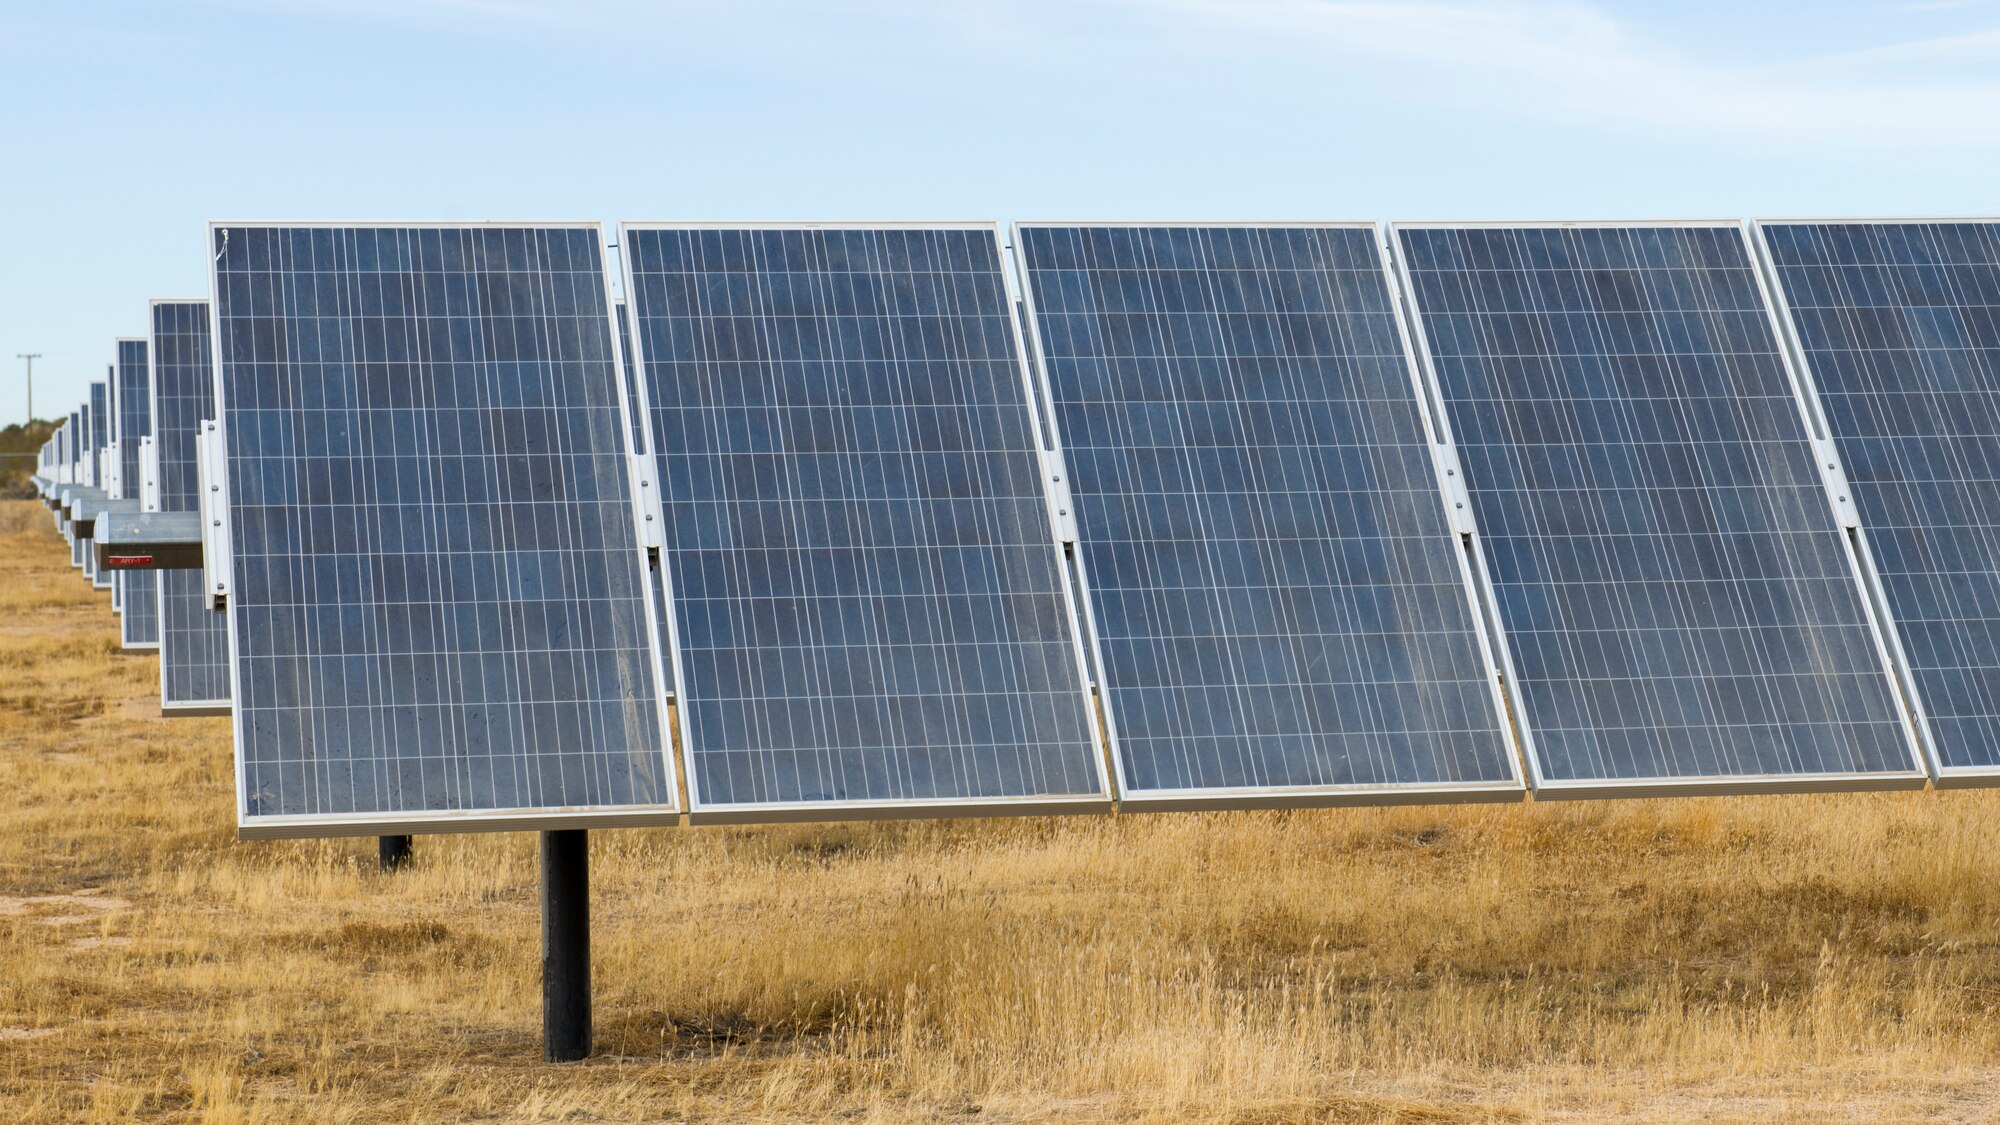 Solar panel array at Edwards Air Force Base, California.